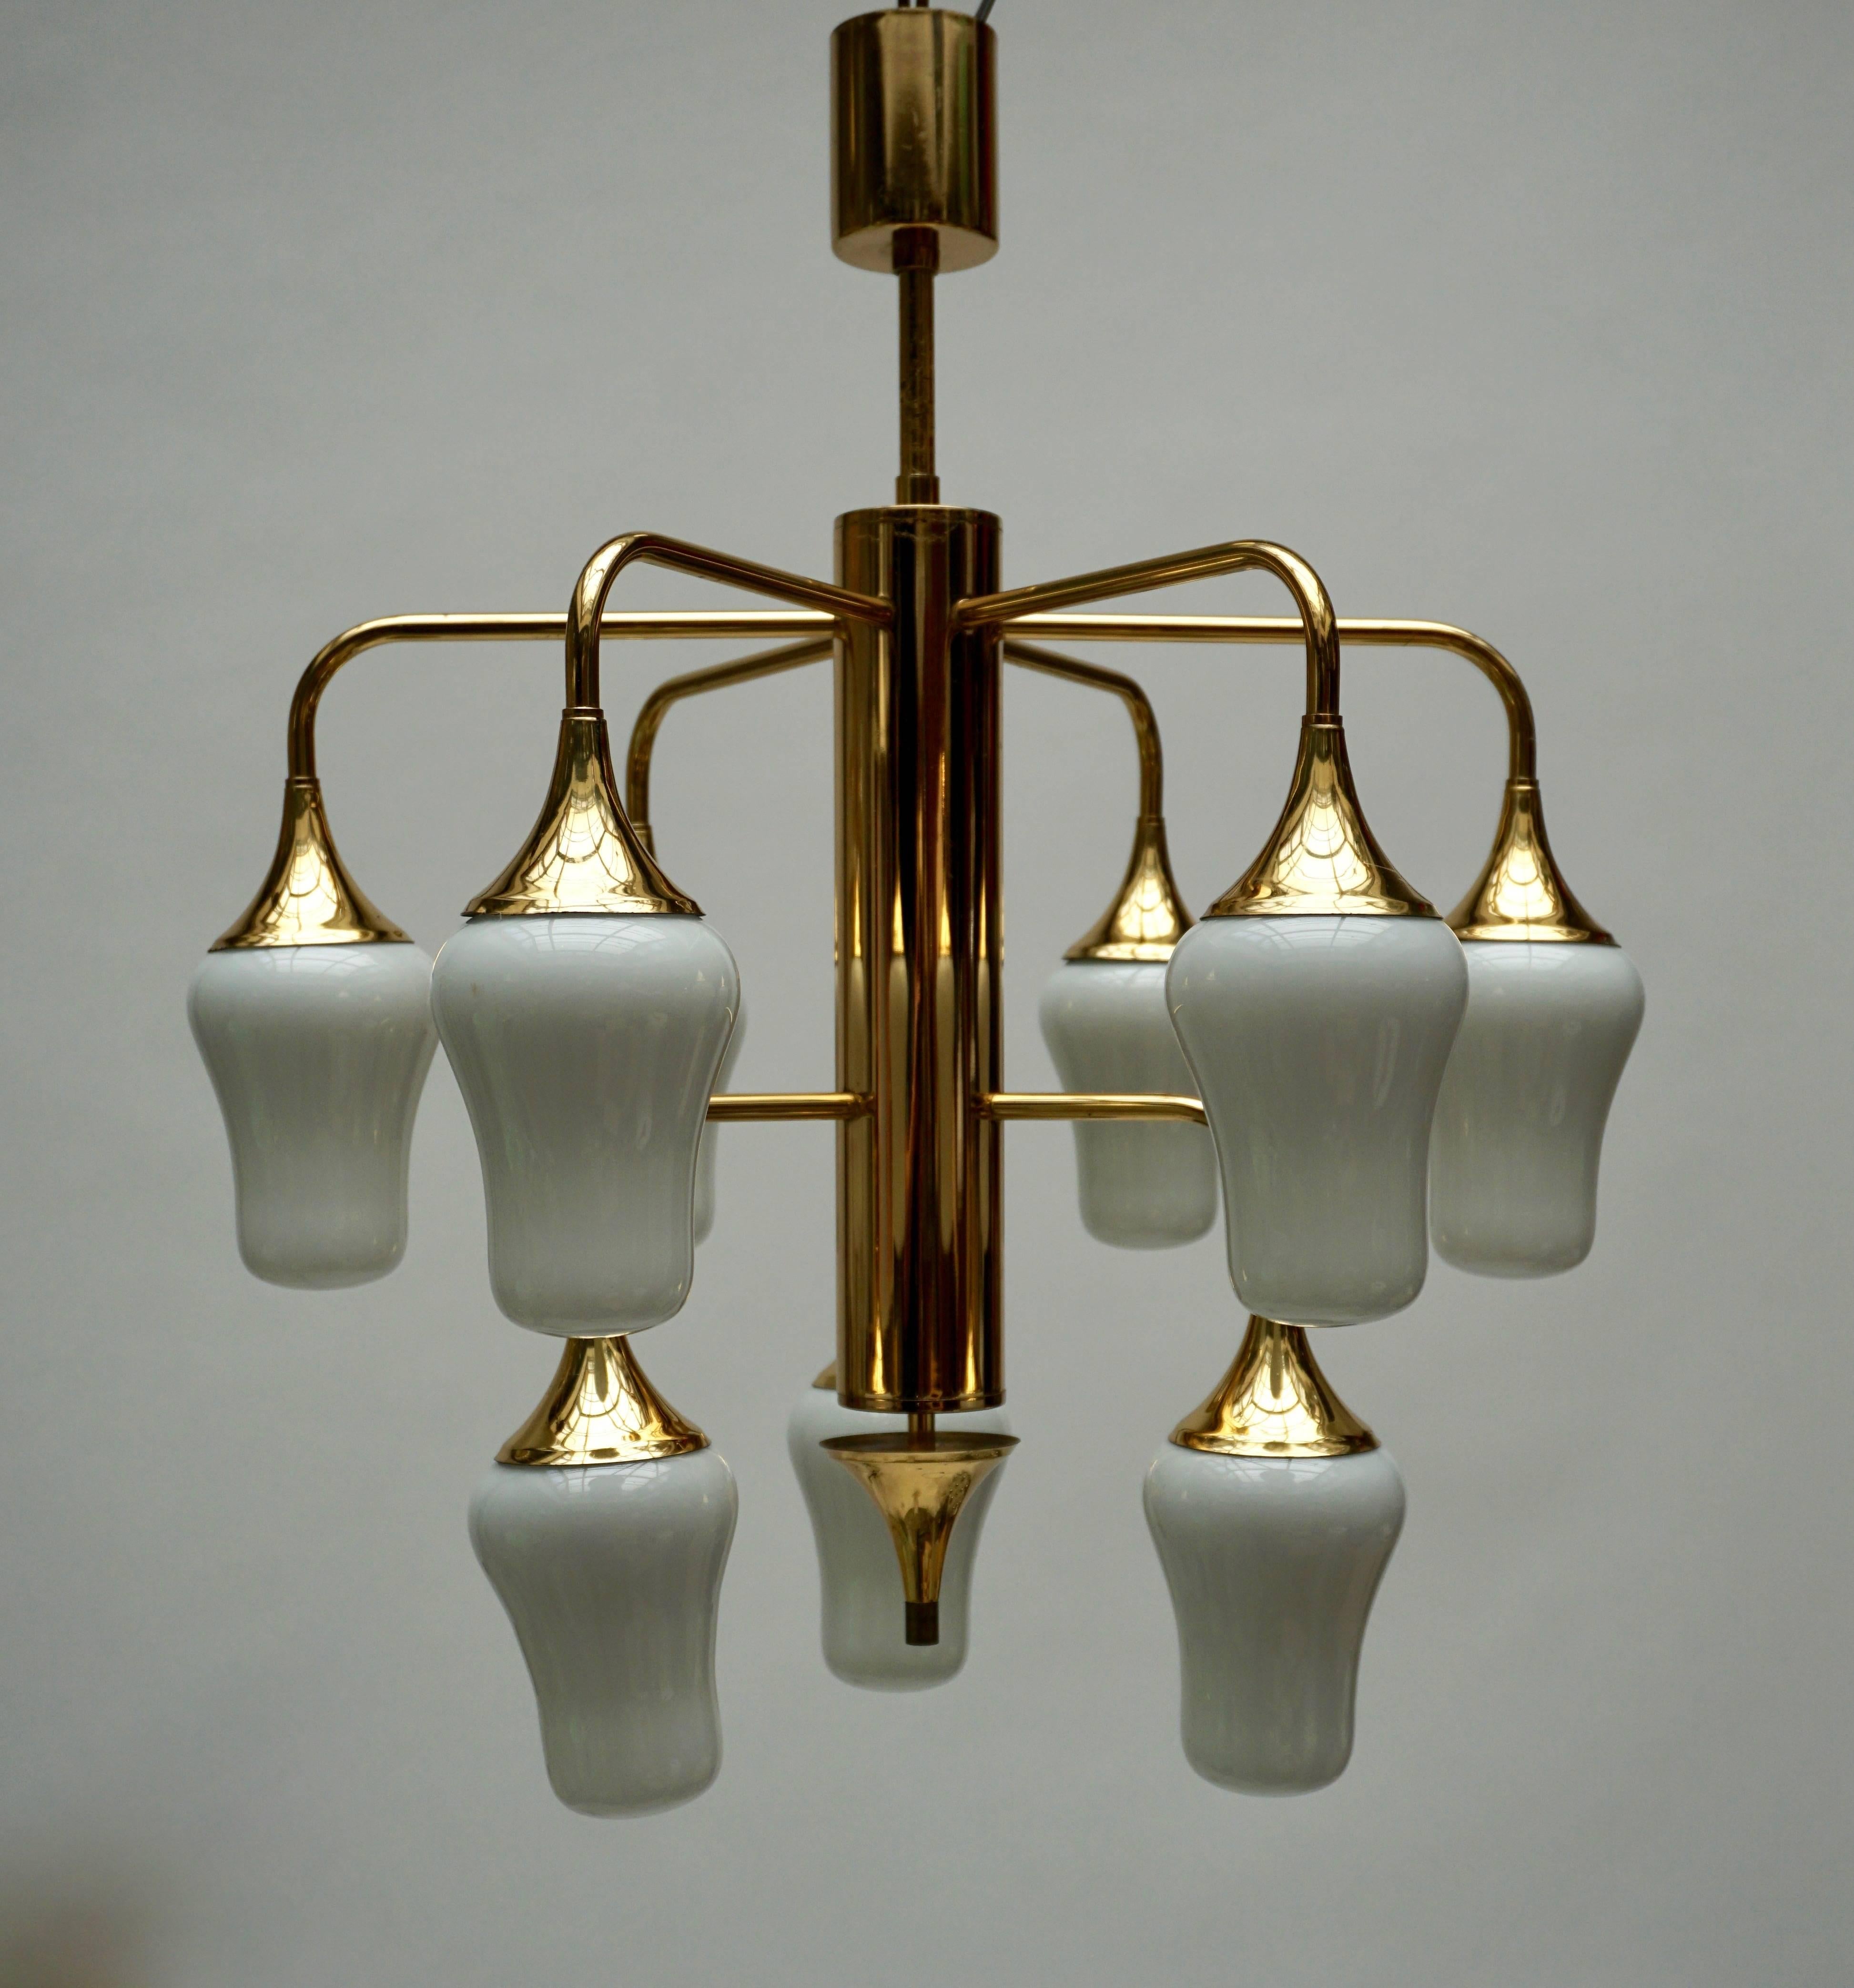 Italian glass and brass chandelier.
Measures: Diameter 52 cm.
Height 62 cm.
Nine E14 bulbs.